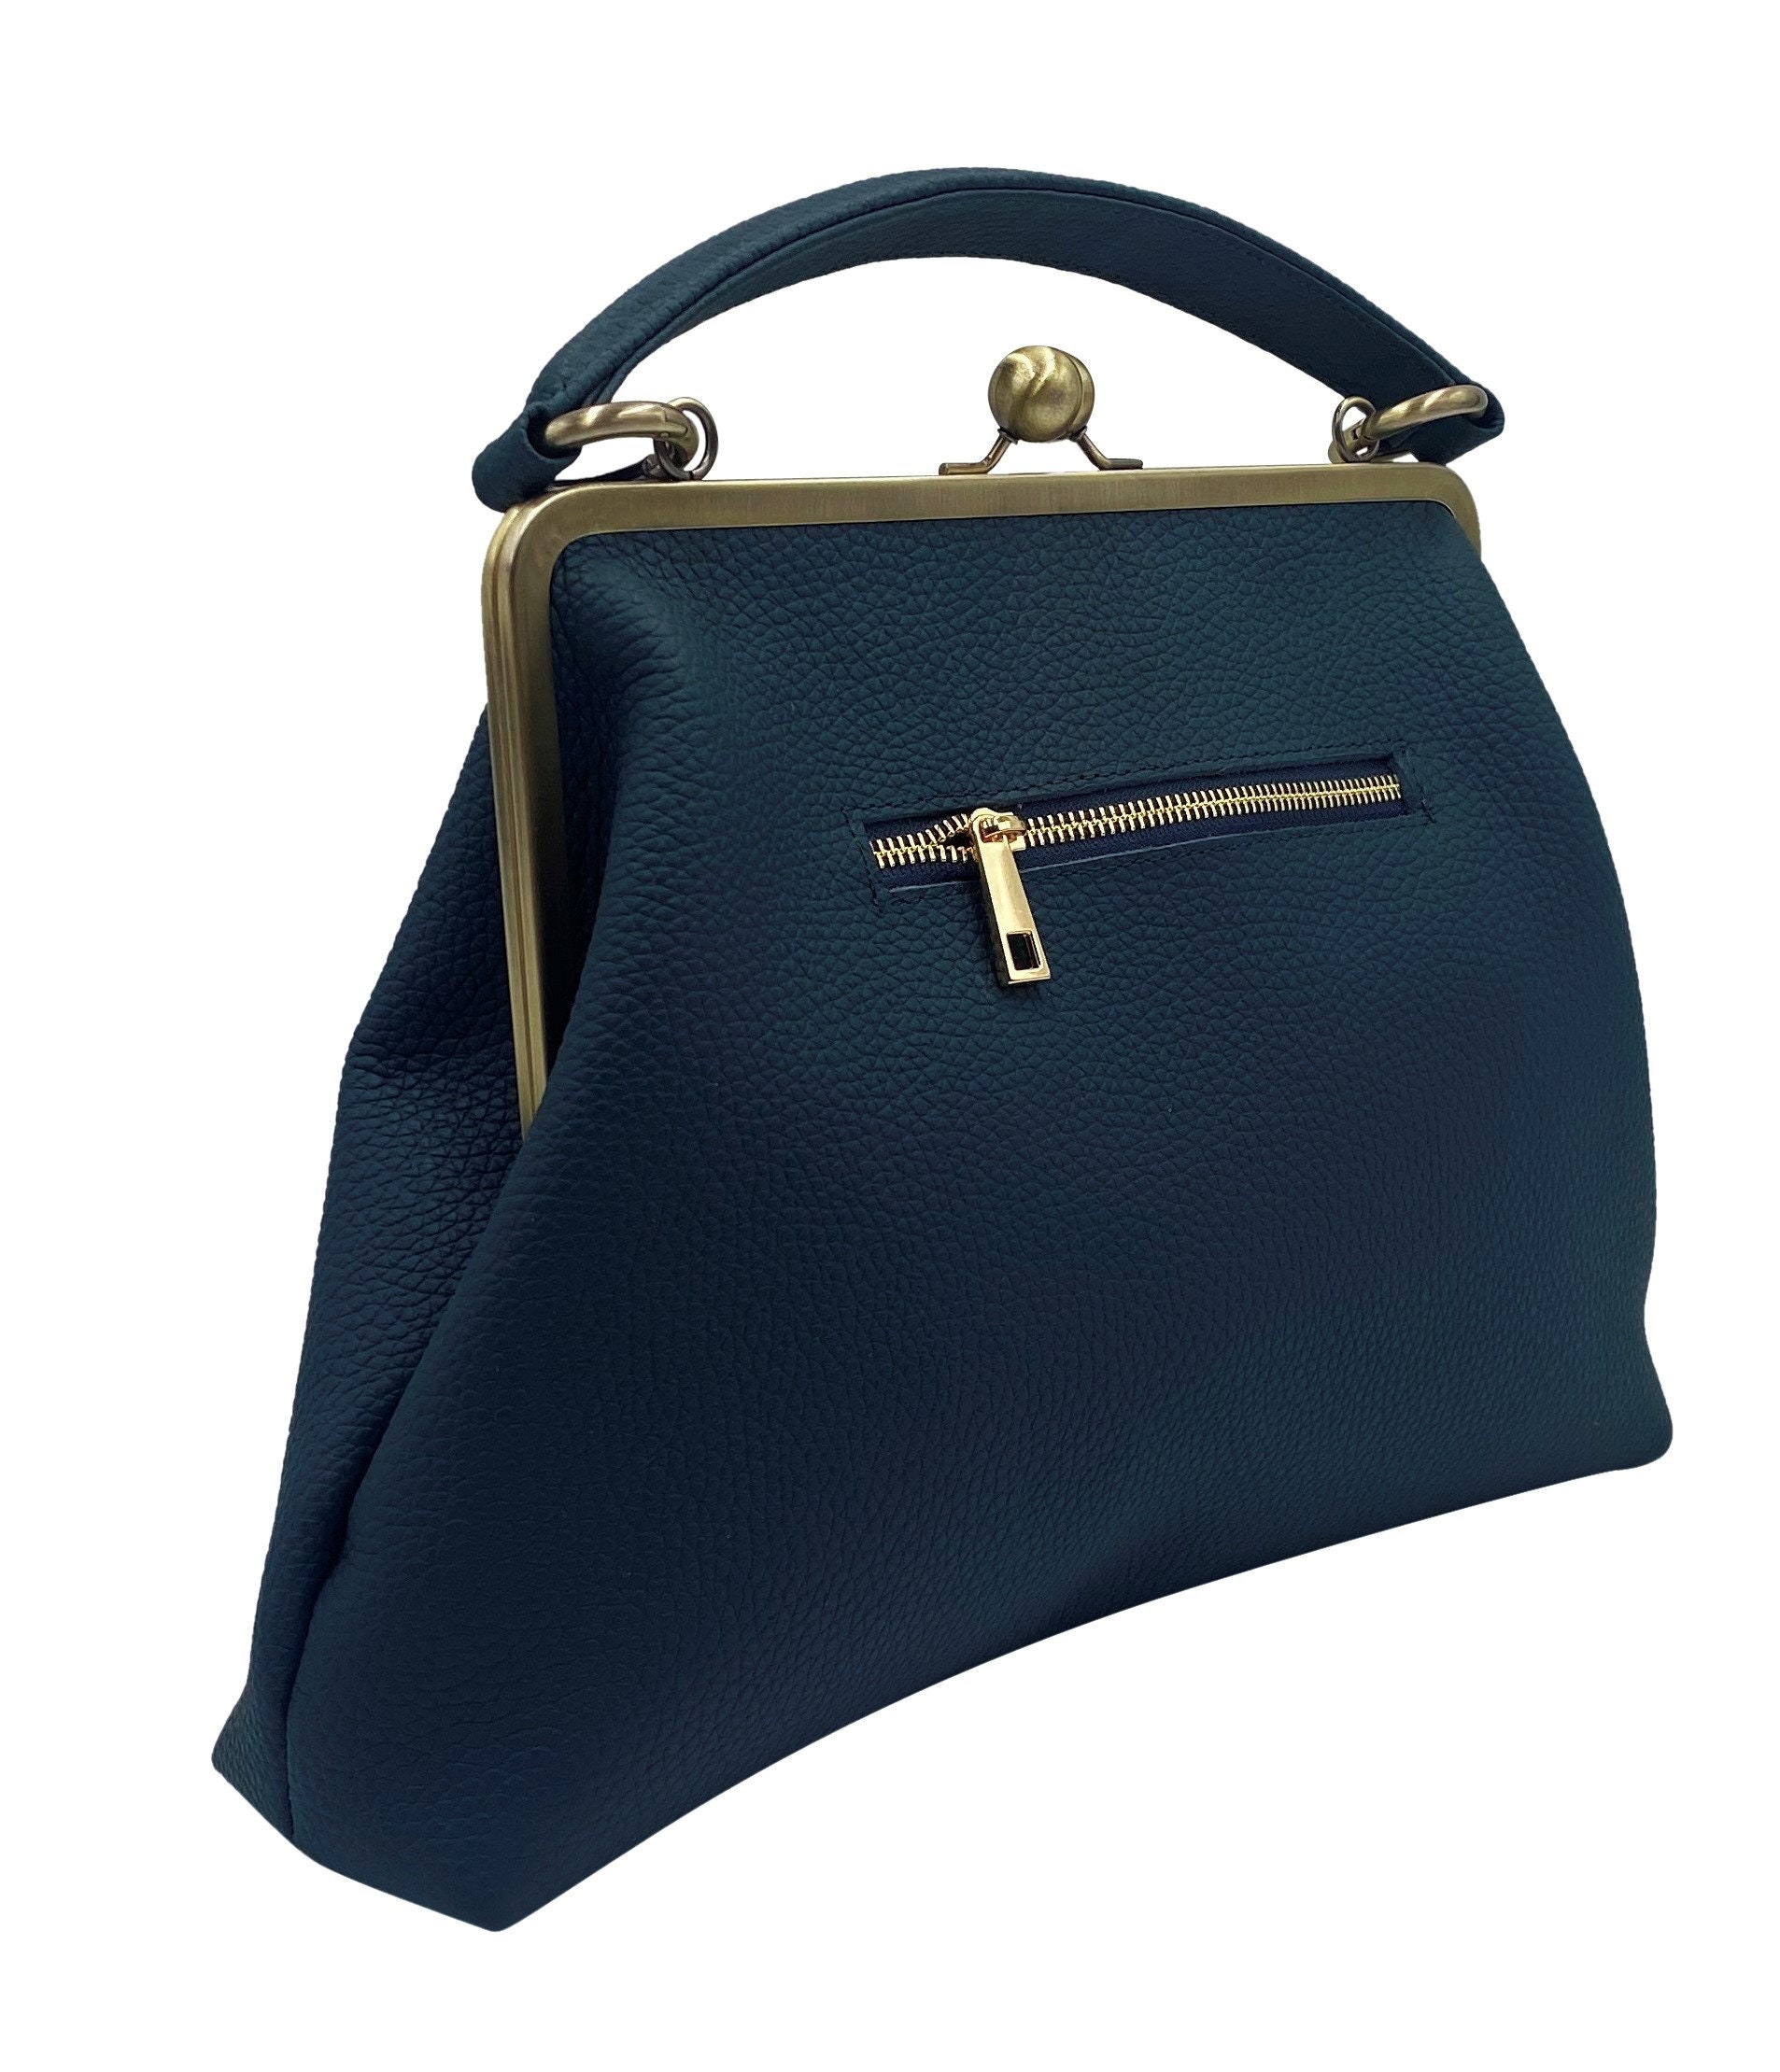 Retro Handbags Womens Kiss Lock Handbag "Olivia" in navy blue Vintage Leather Shoulder Bag Bags & Purses Handbags Top Handle Bags Kiss Lock Purse 